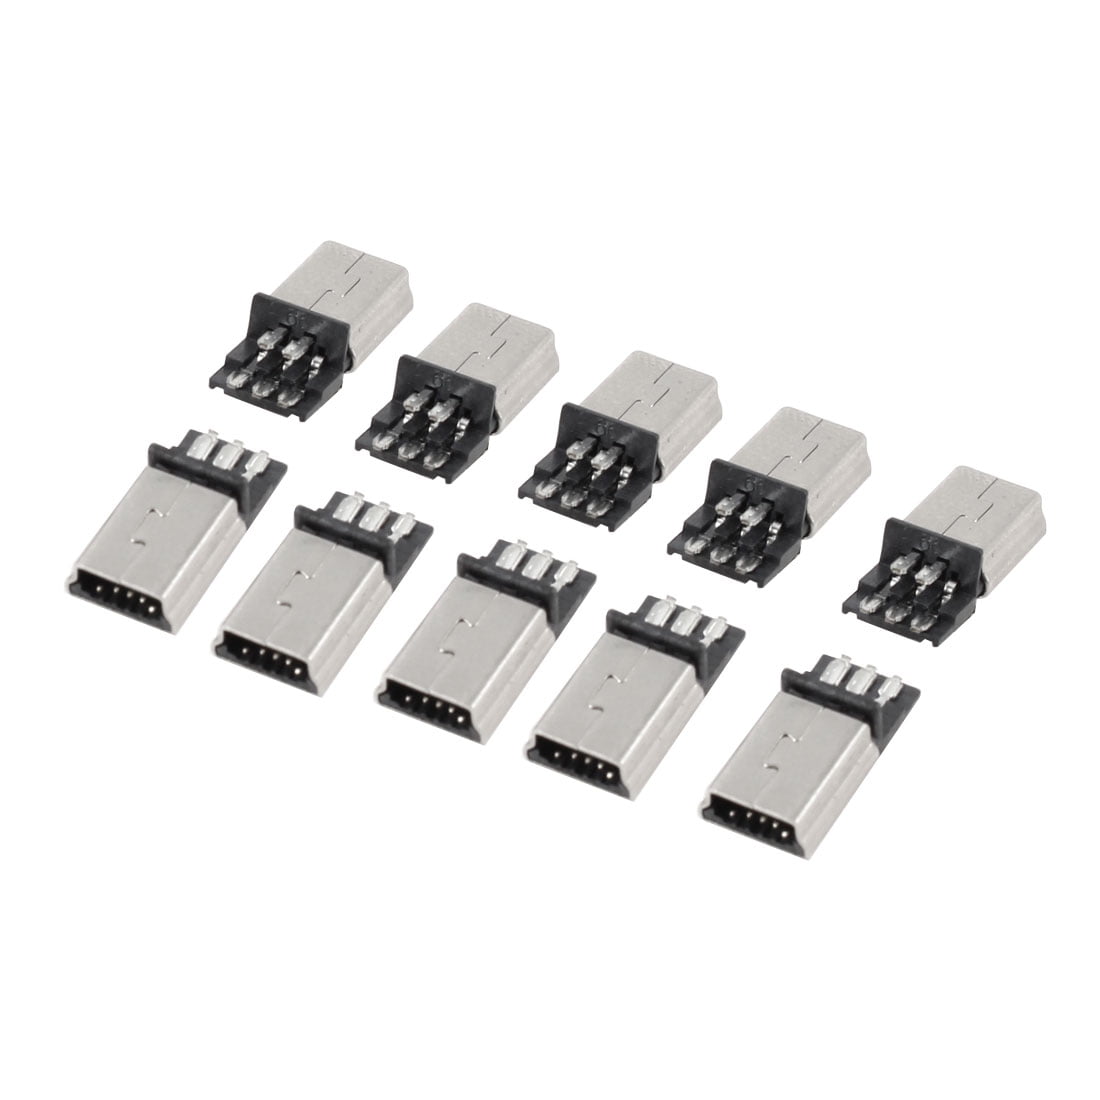 10 X Mini Usb 5 Pin Type B Male Connector Port Solder For Pcb Walmart